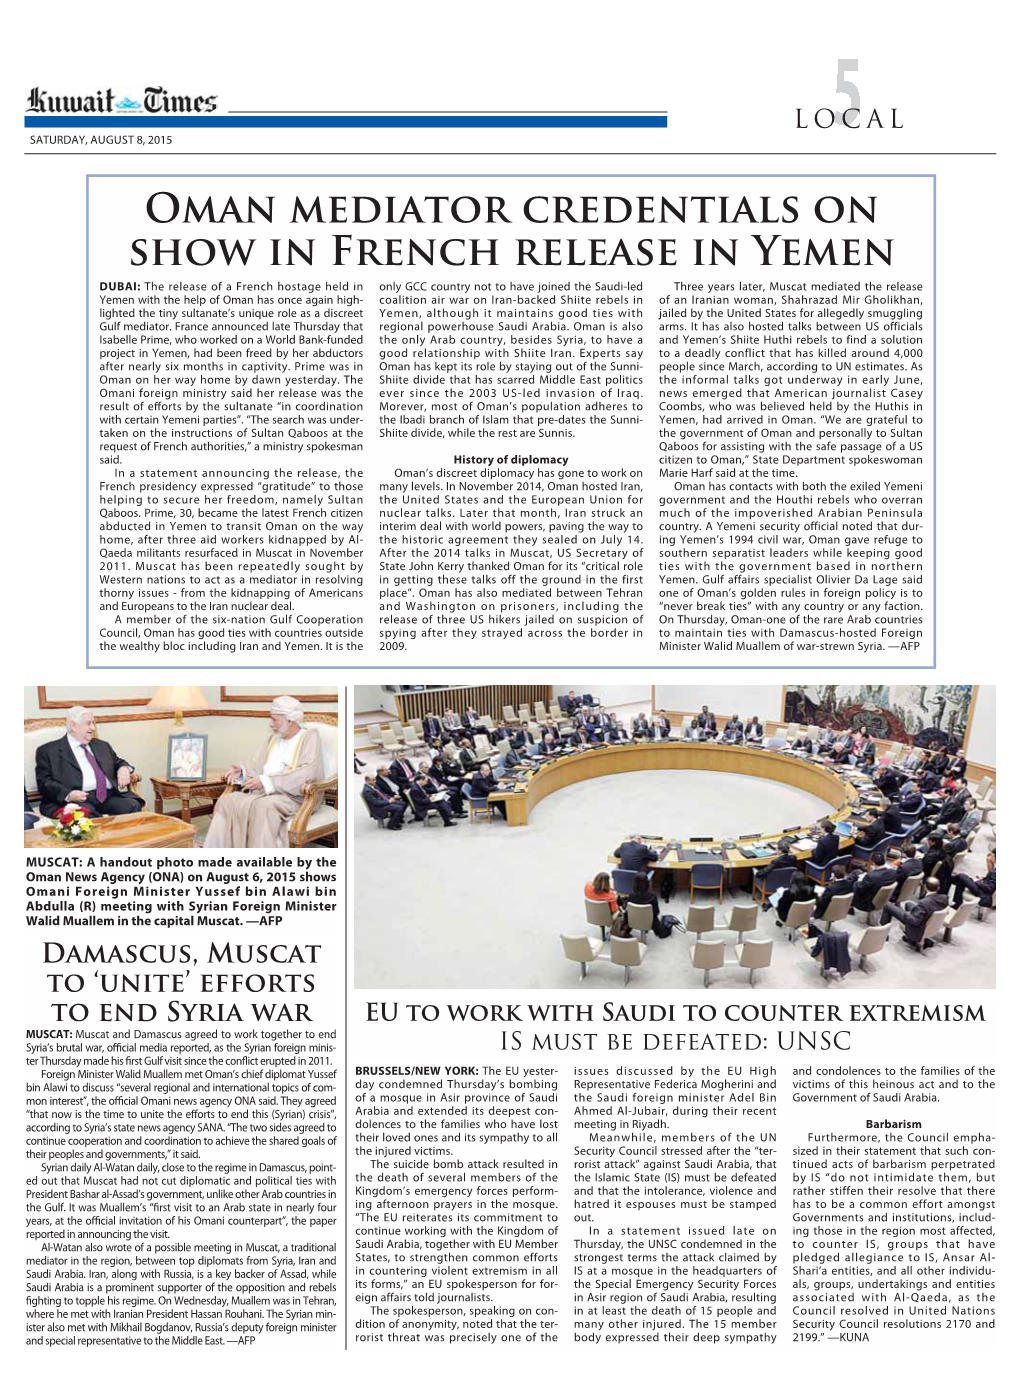 Oman Mediator Credentials on Show in French Release in Yemen